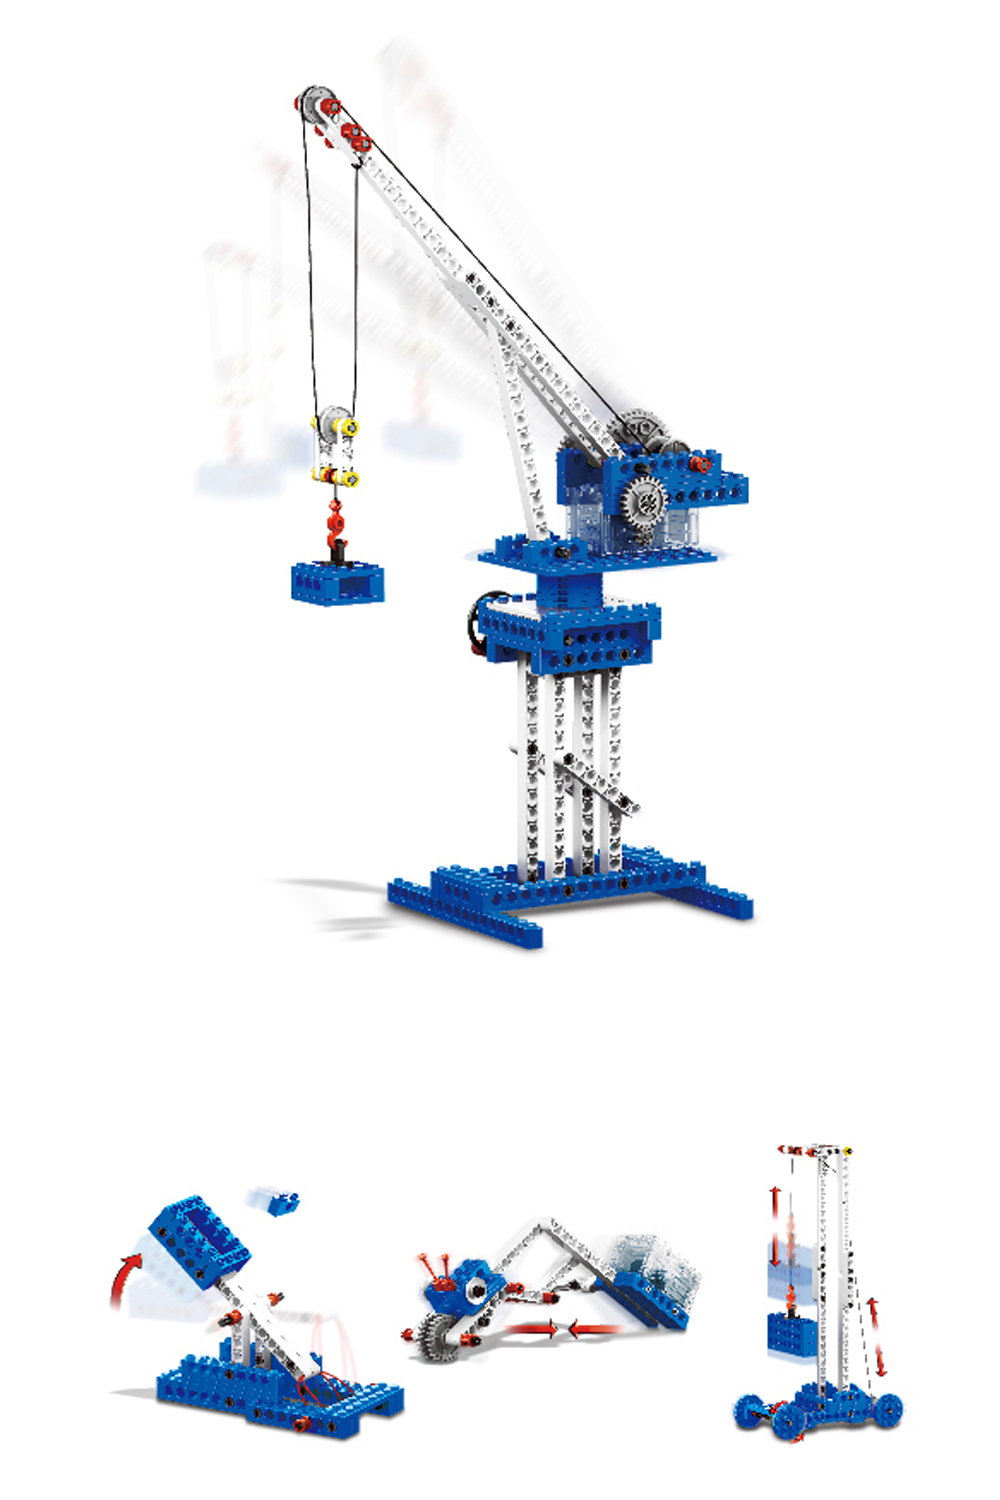 WANGE Mechanical Engineering Engineering tower crane power machinery 1402 Building Blocks Toy Set